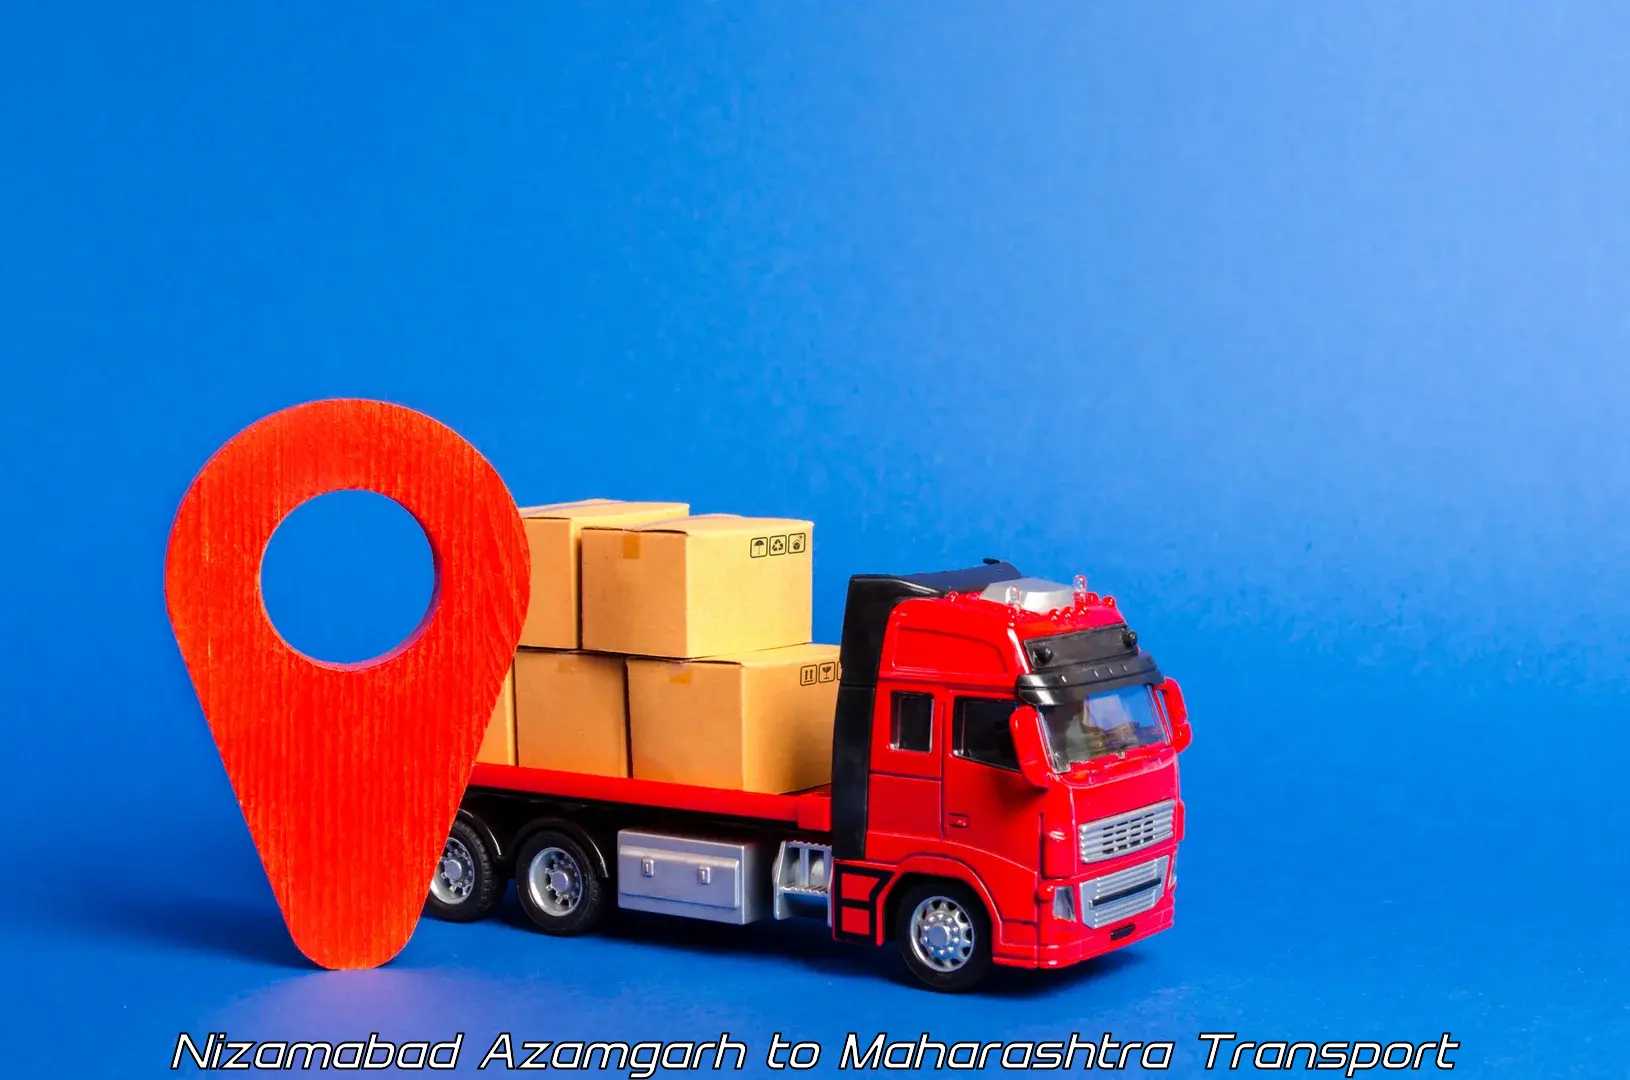 Truck transport companies in India Nizamabad Azamgarh to Pachora